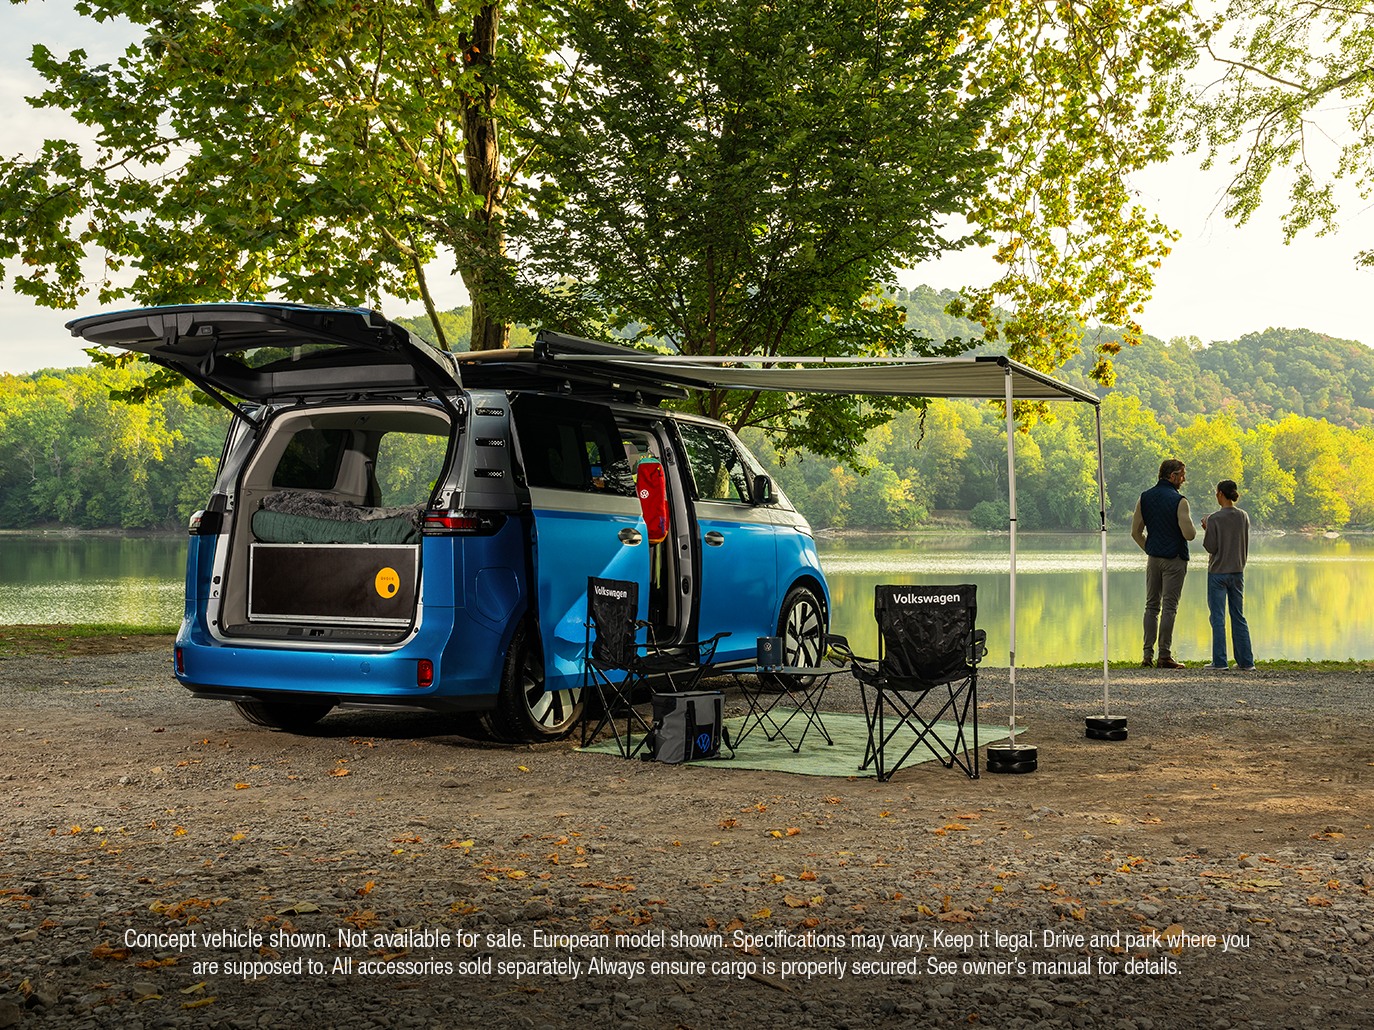 Camping im Auto - VW FS